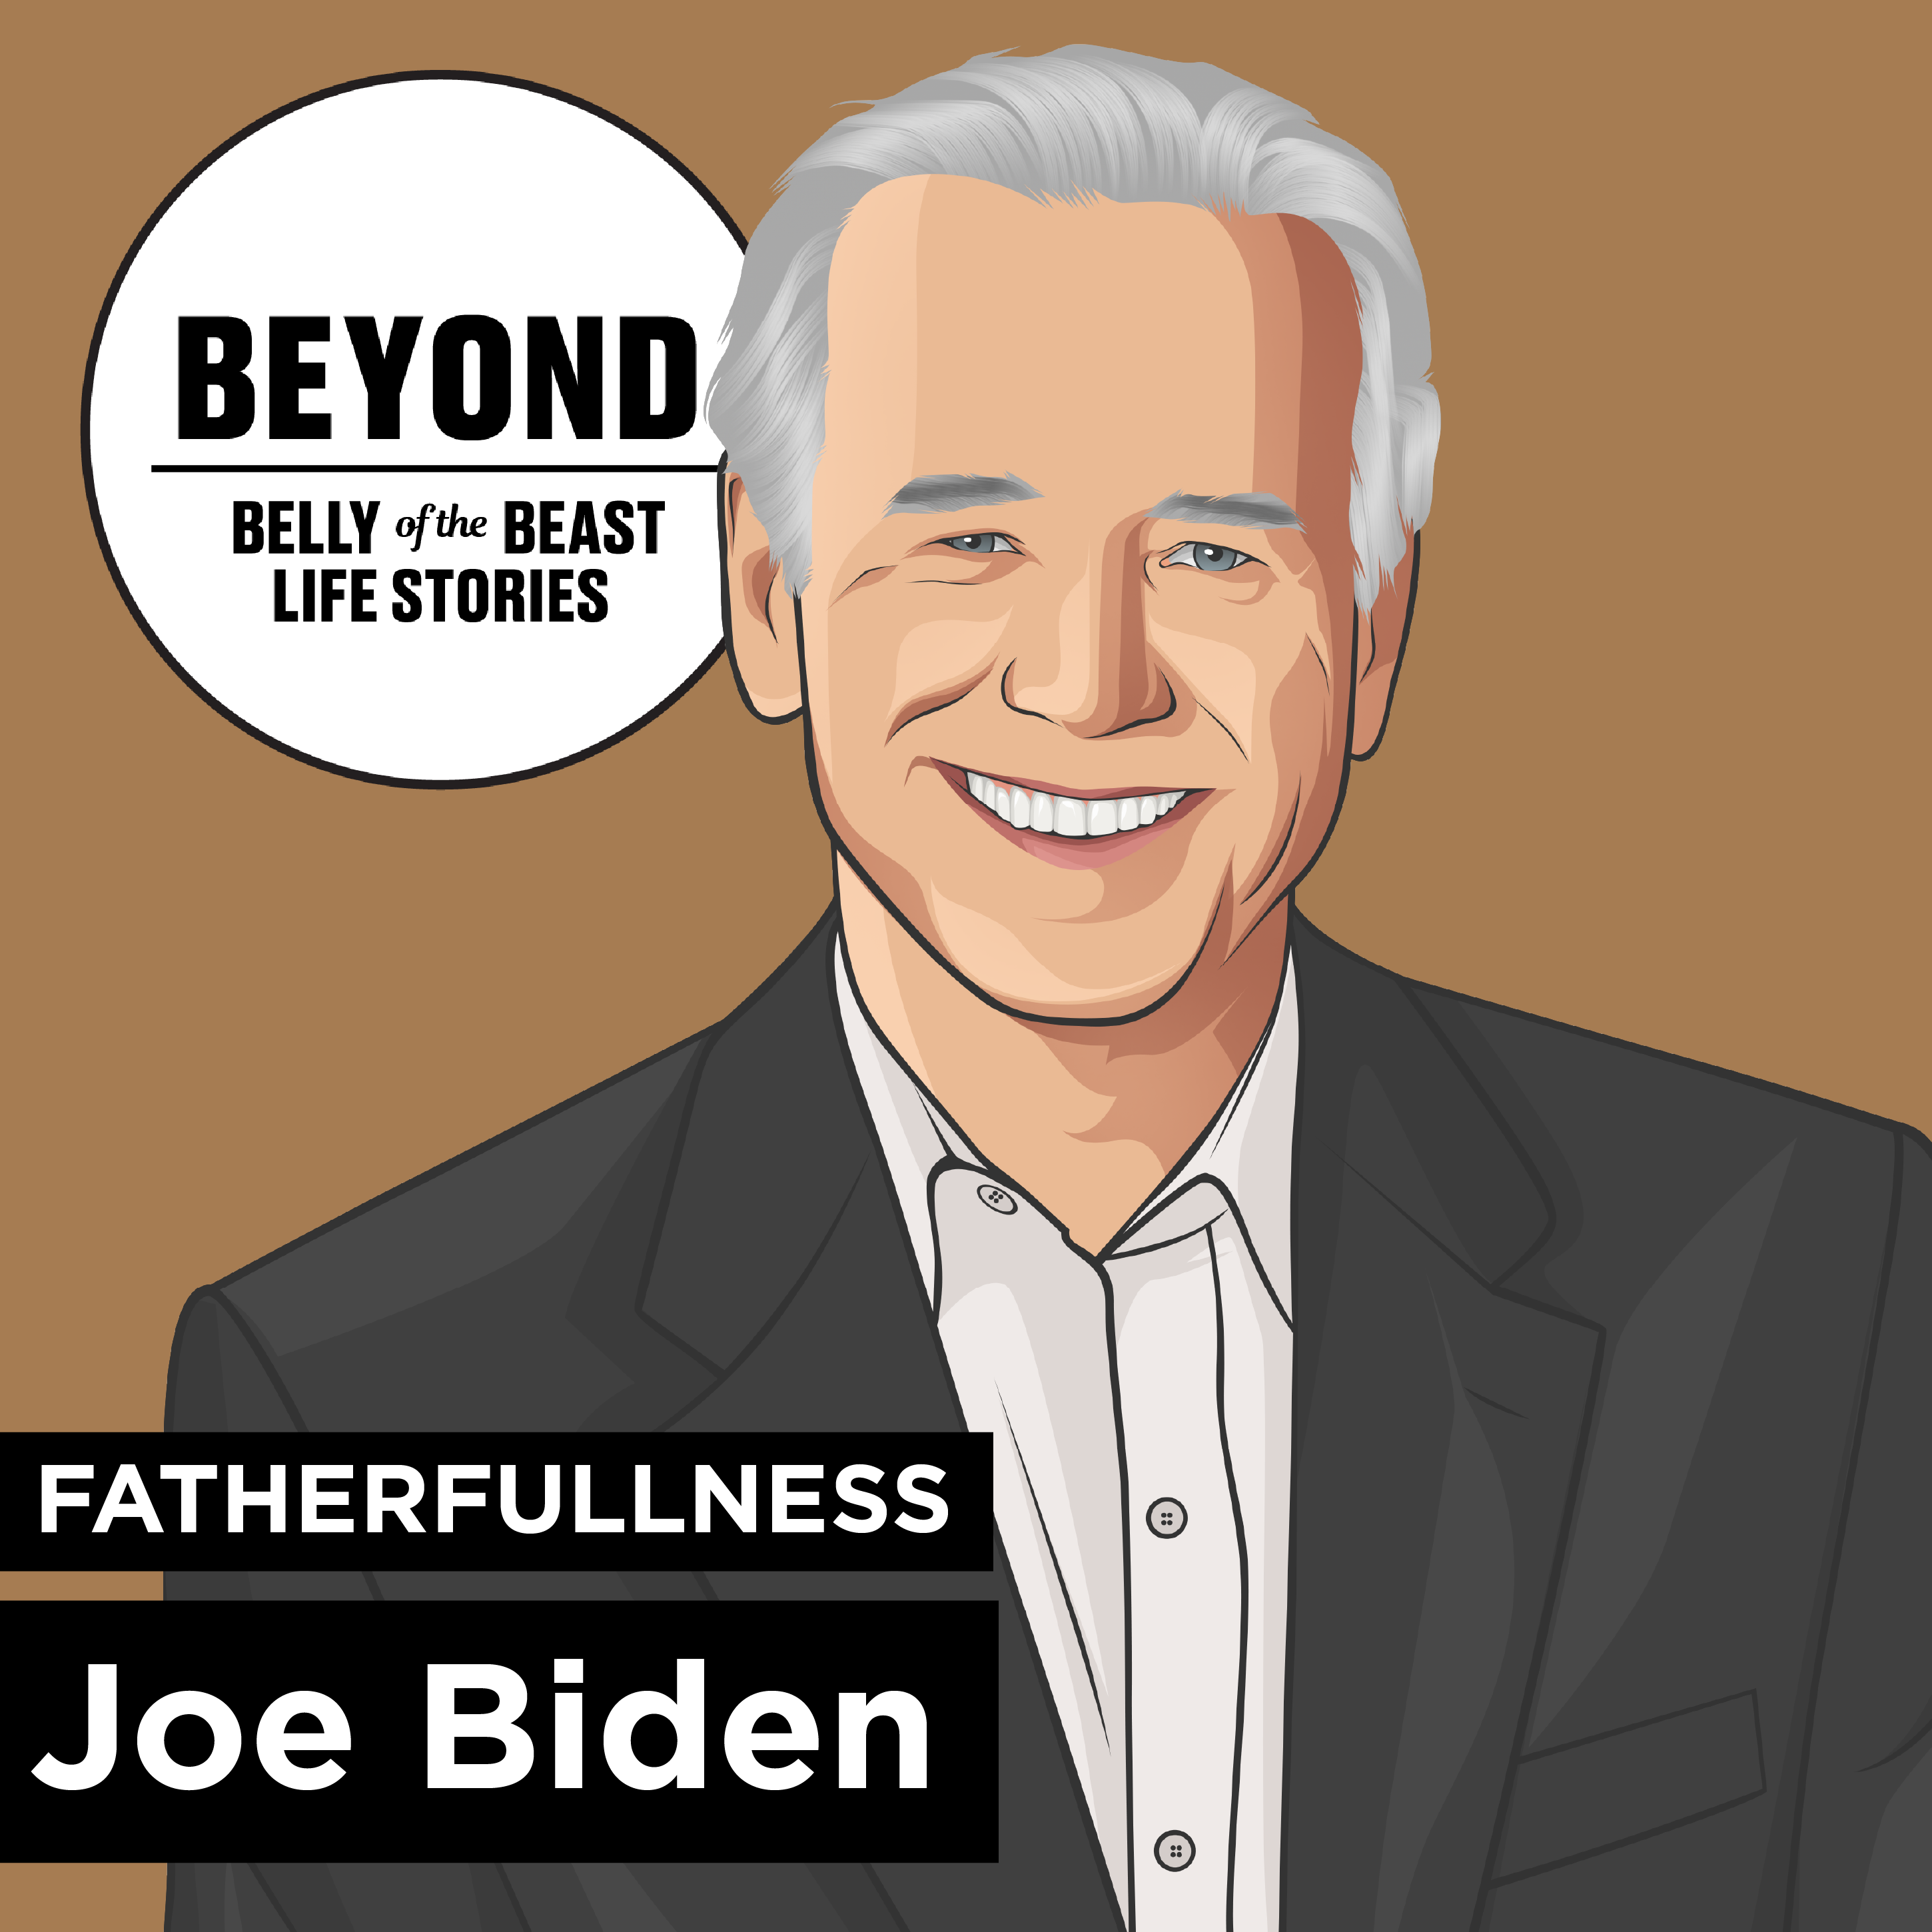 Beyond: Fatherfullness and Joe Biden Image